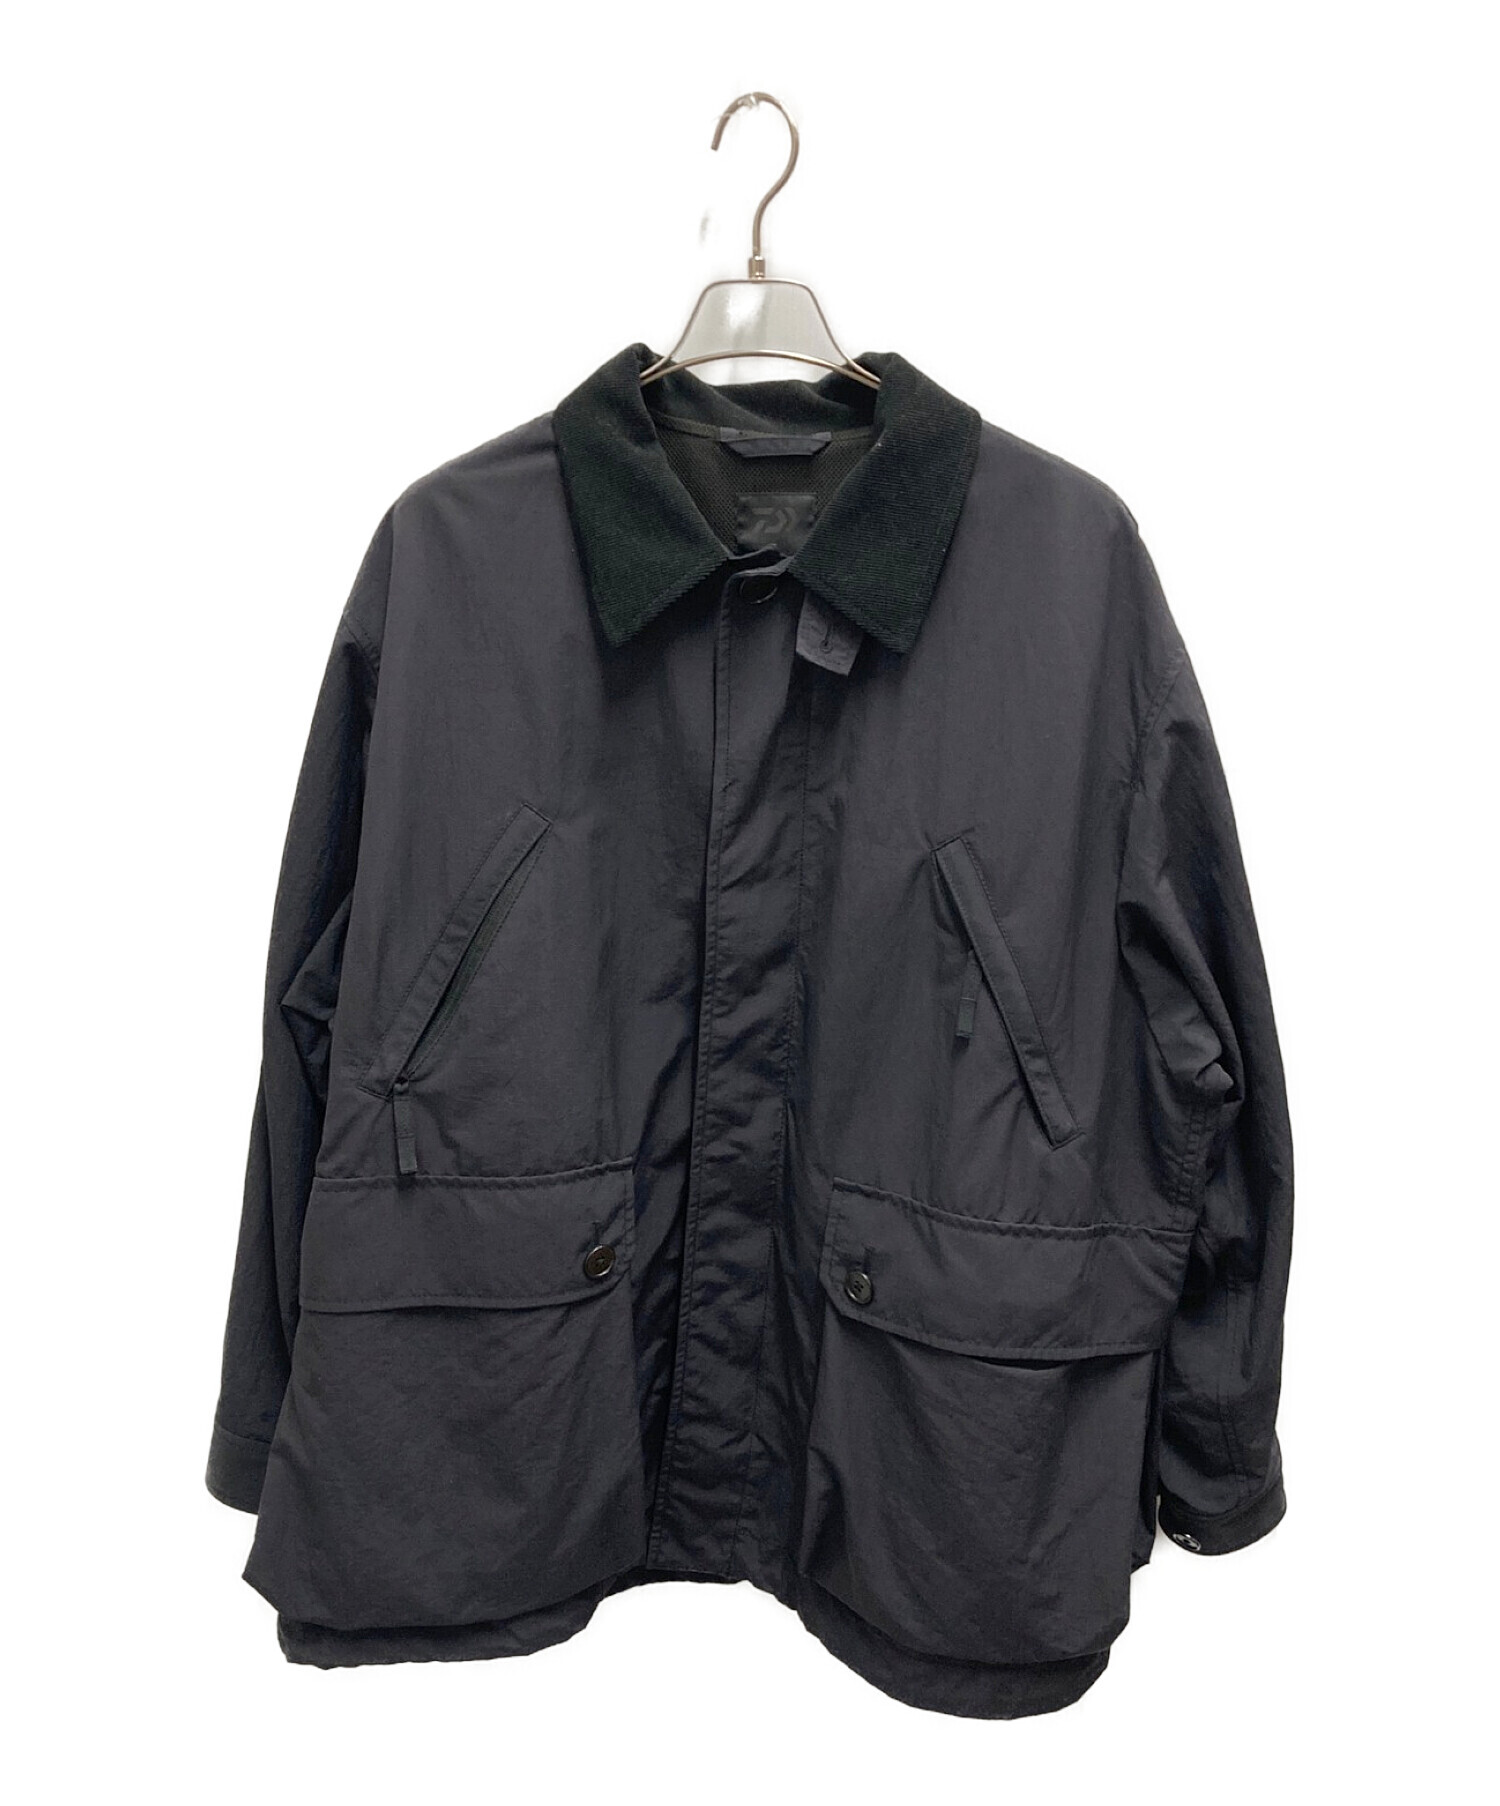 DAIWA PIER39 (ダイワ ピア39) JOURNAL STANDARD (ジャーナルスタンダード) Tech Field Jacket  ブラック サイズ:M